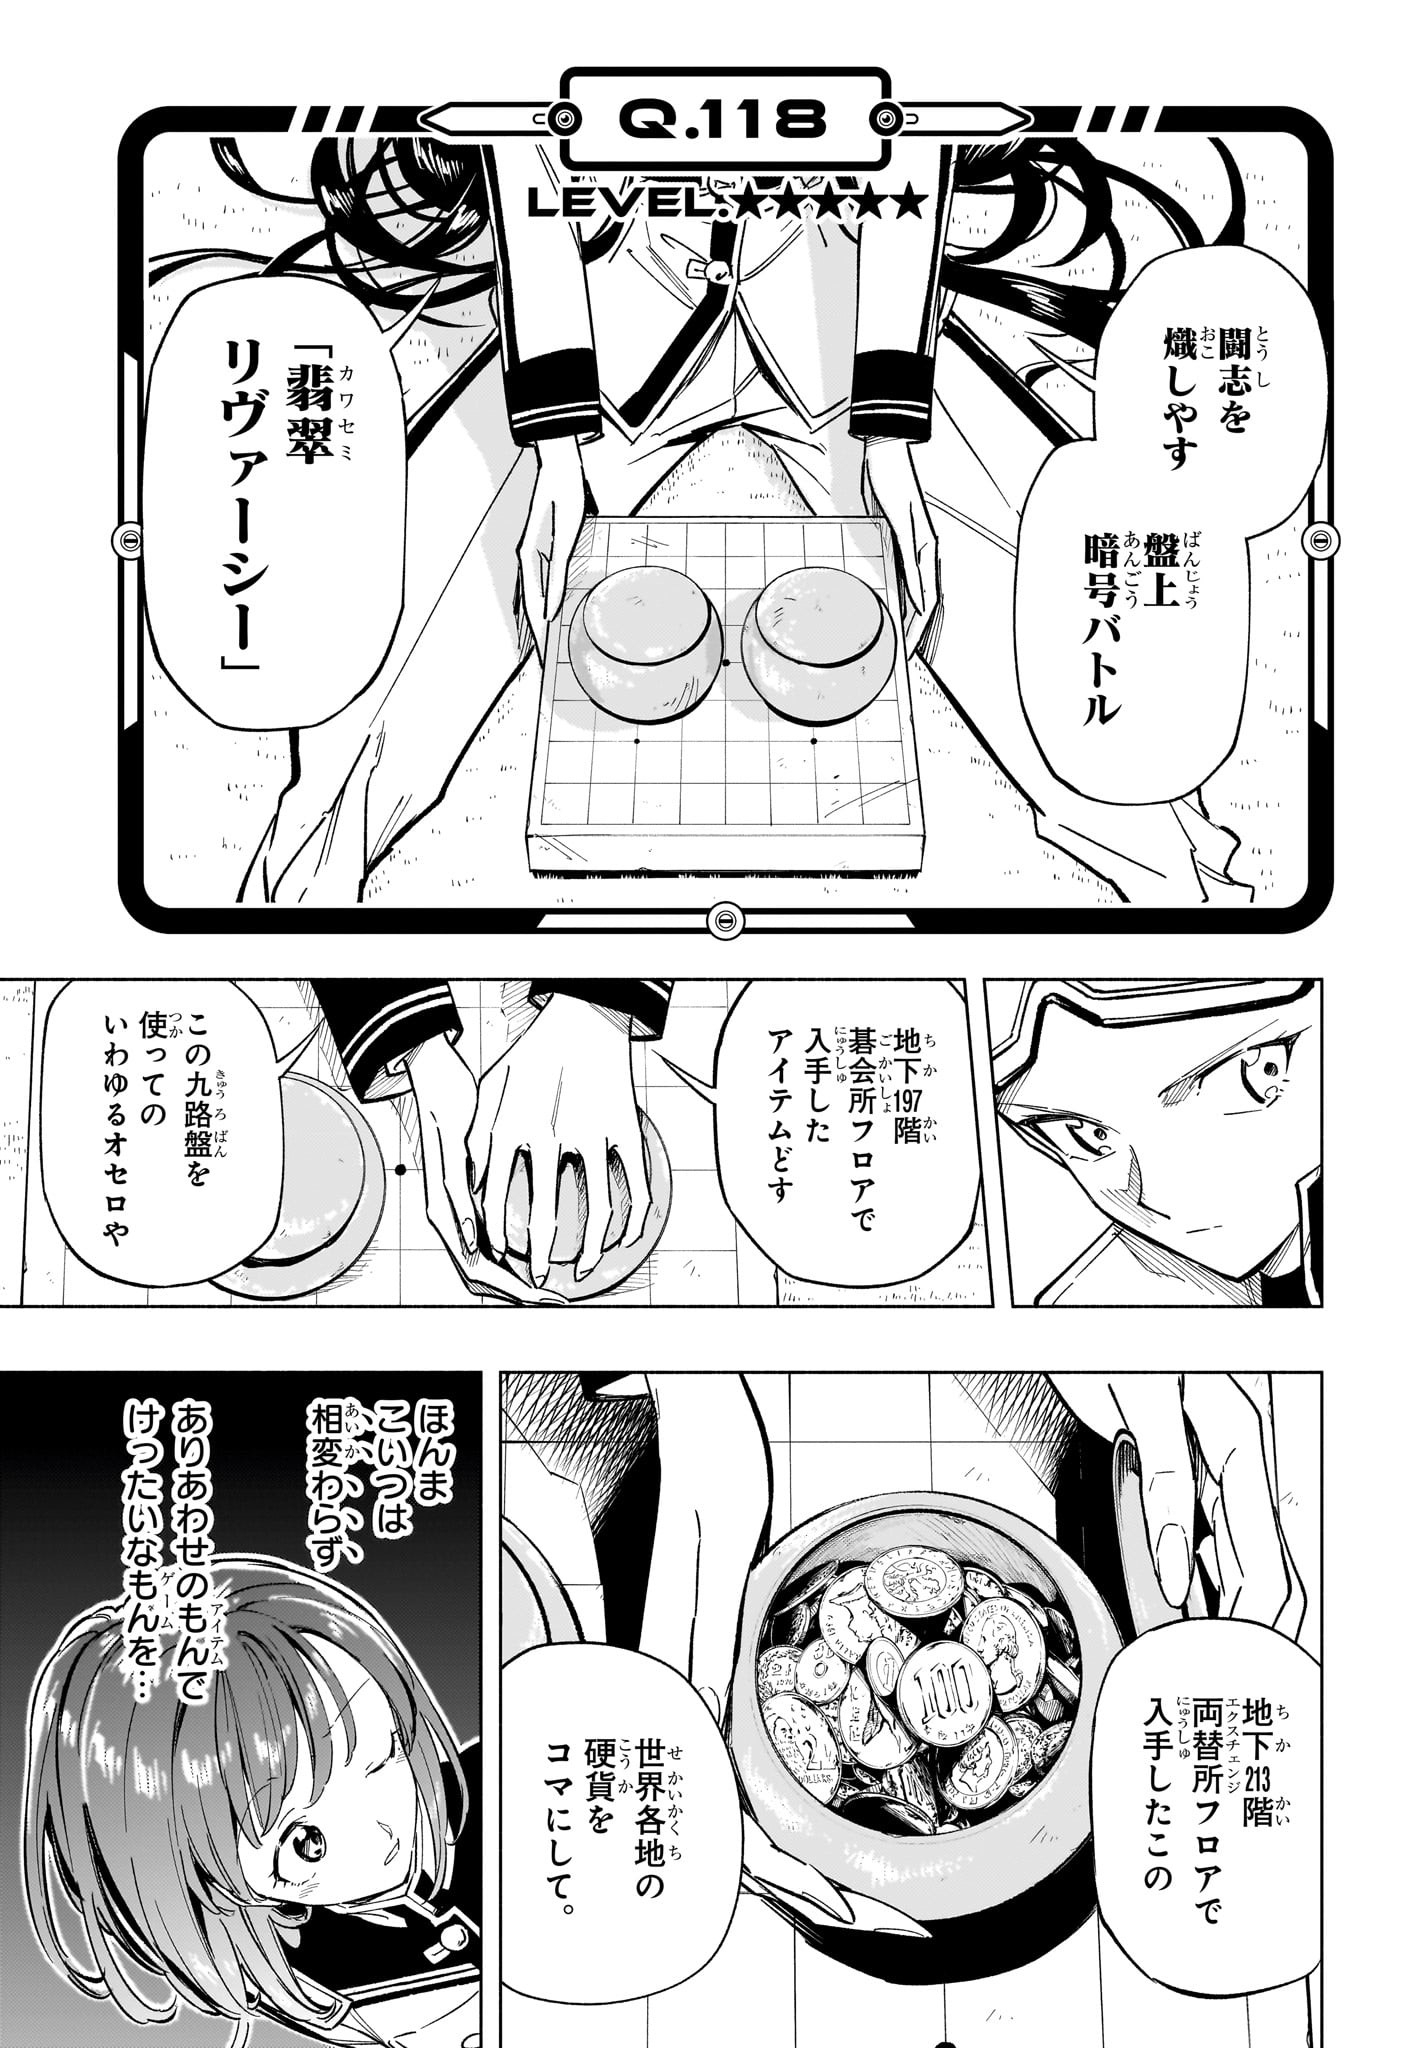 Angou Gakuen no Iroha - Chapter 52 - Page 3